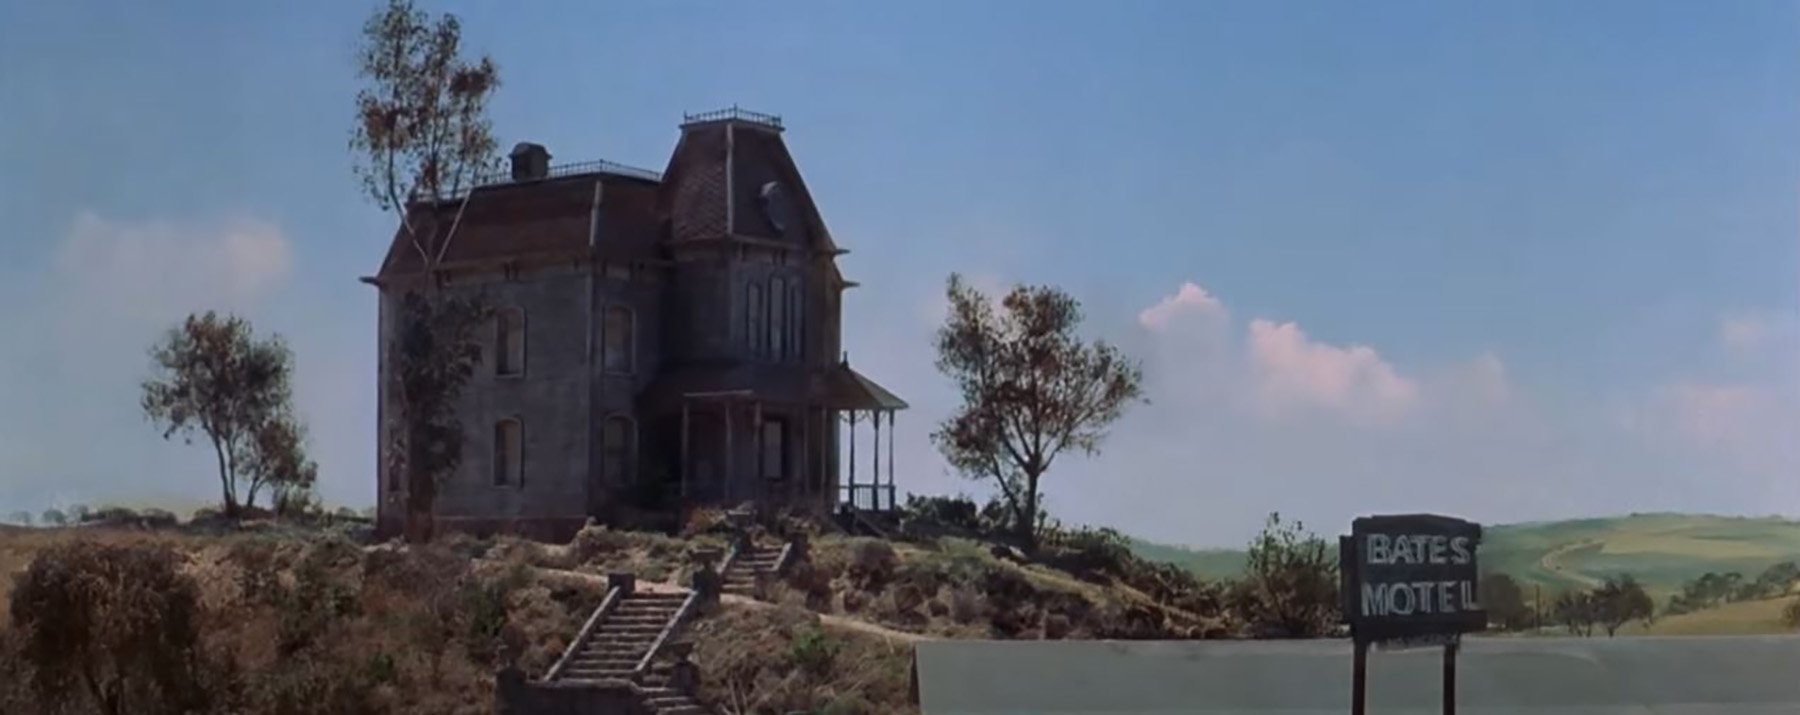 Bates Motel from Psycho II (1983)